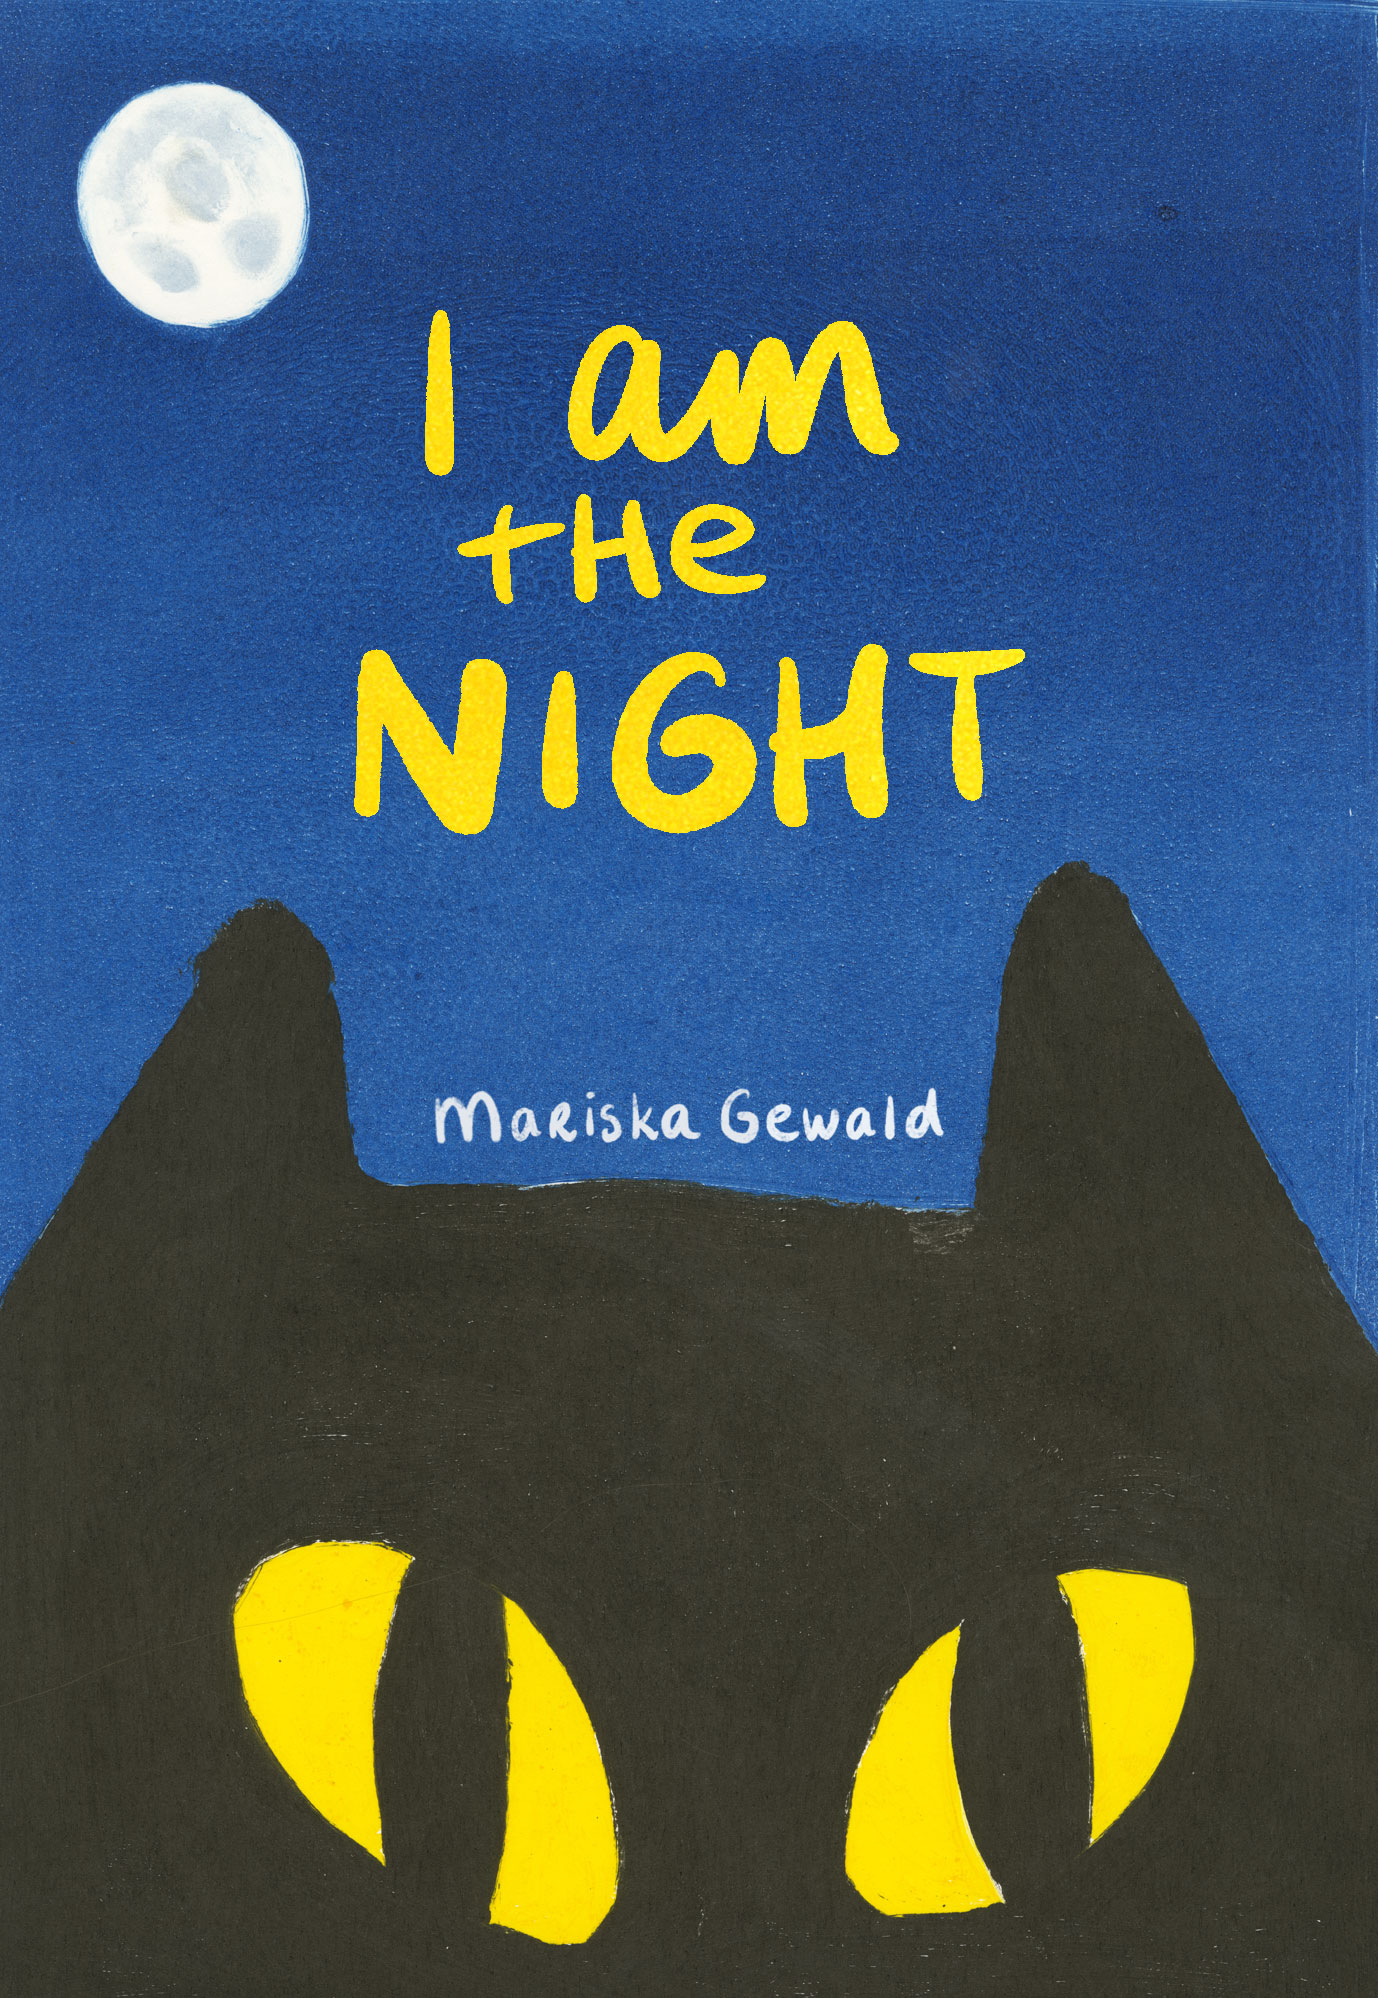 Cover design “I am the Night”